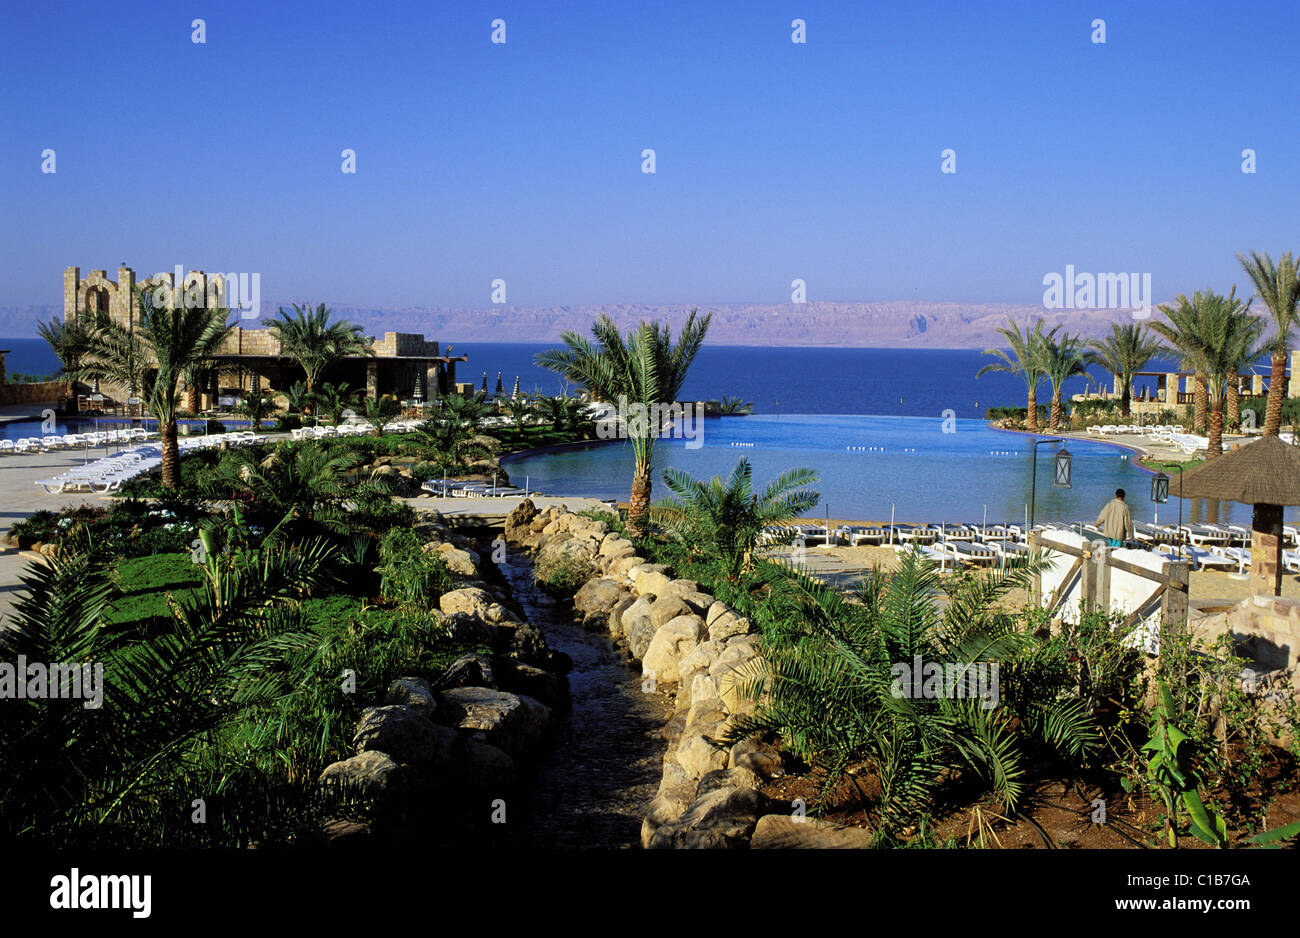 Jordan, Dead Sea, Movenpick hotel Stock Photo - Alamy